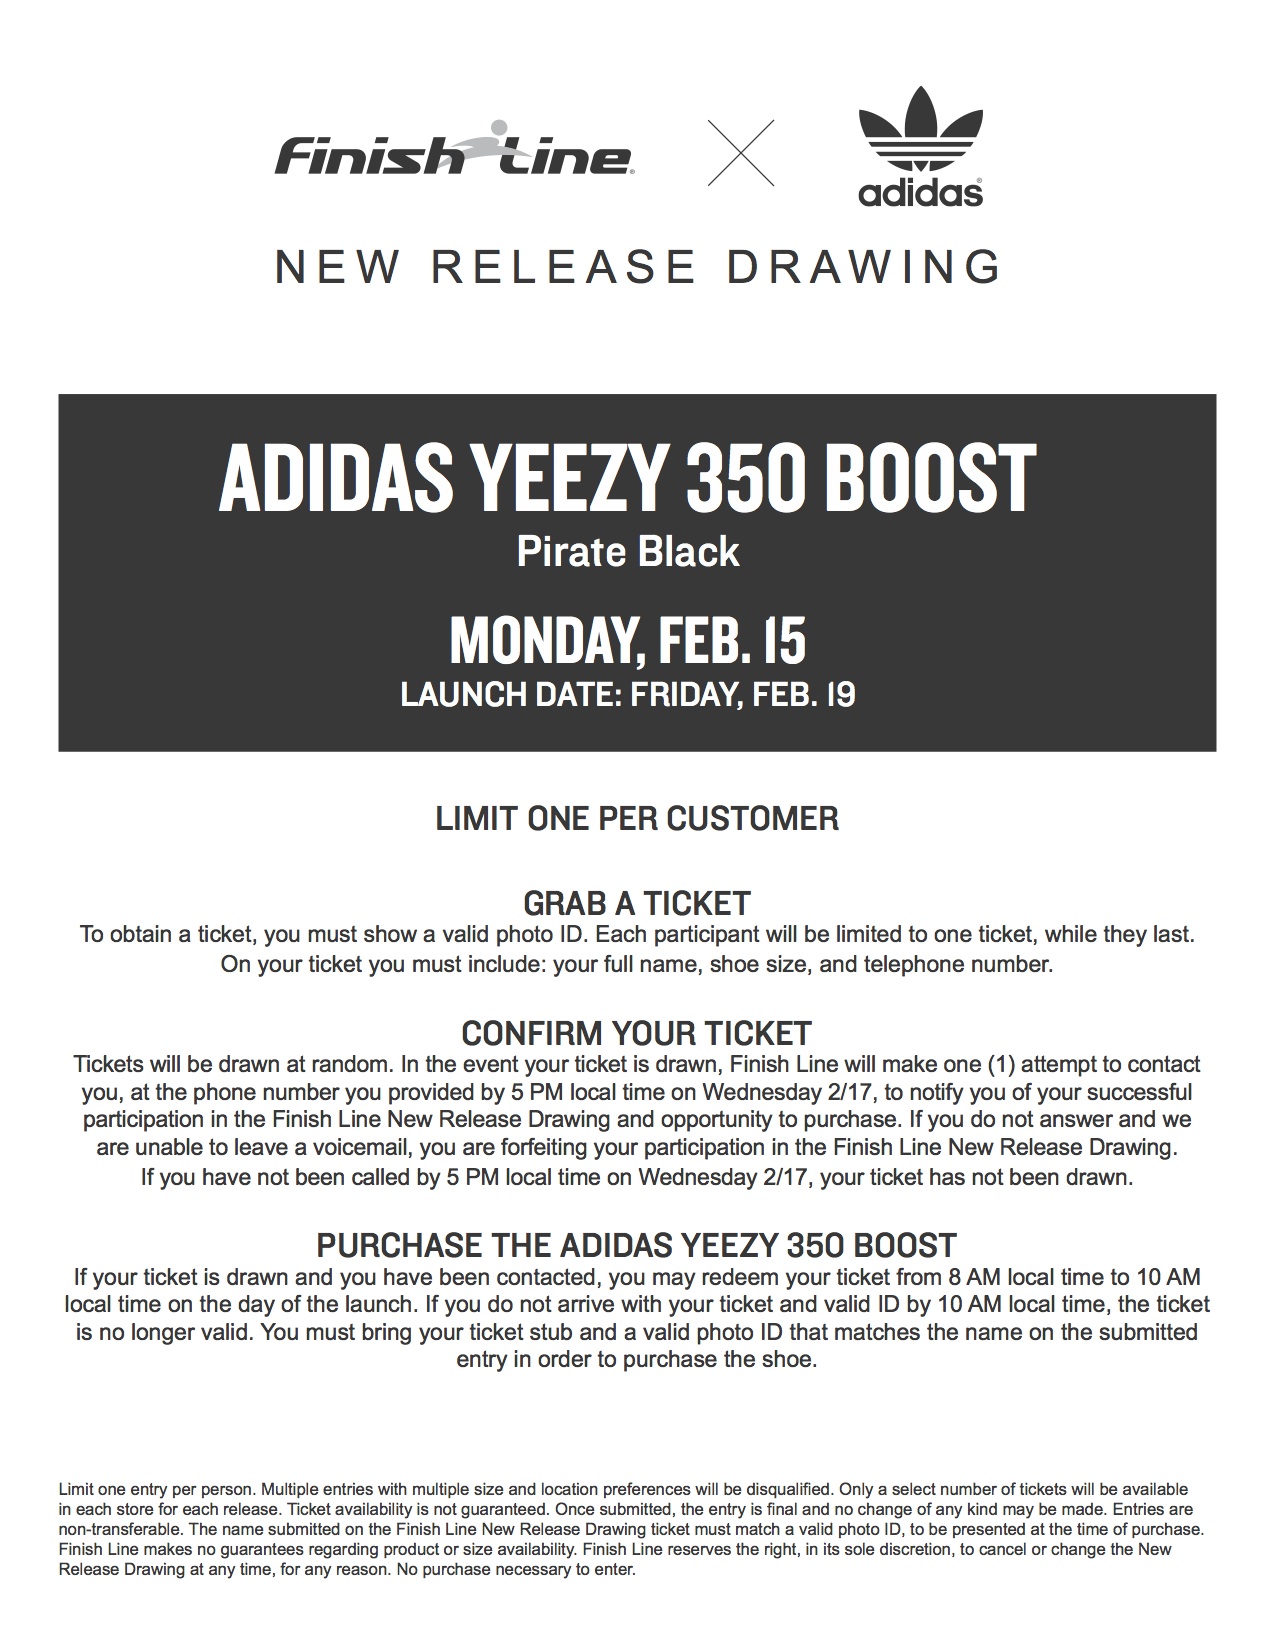 adidas_Yeezy_350_Boost-Flyer1-copy